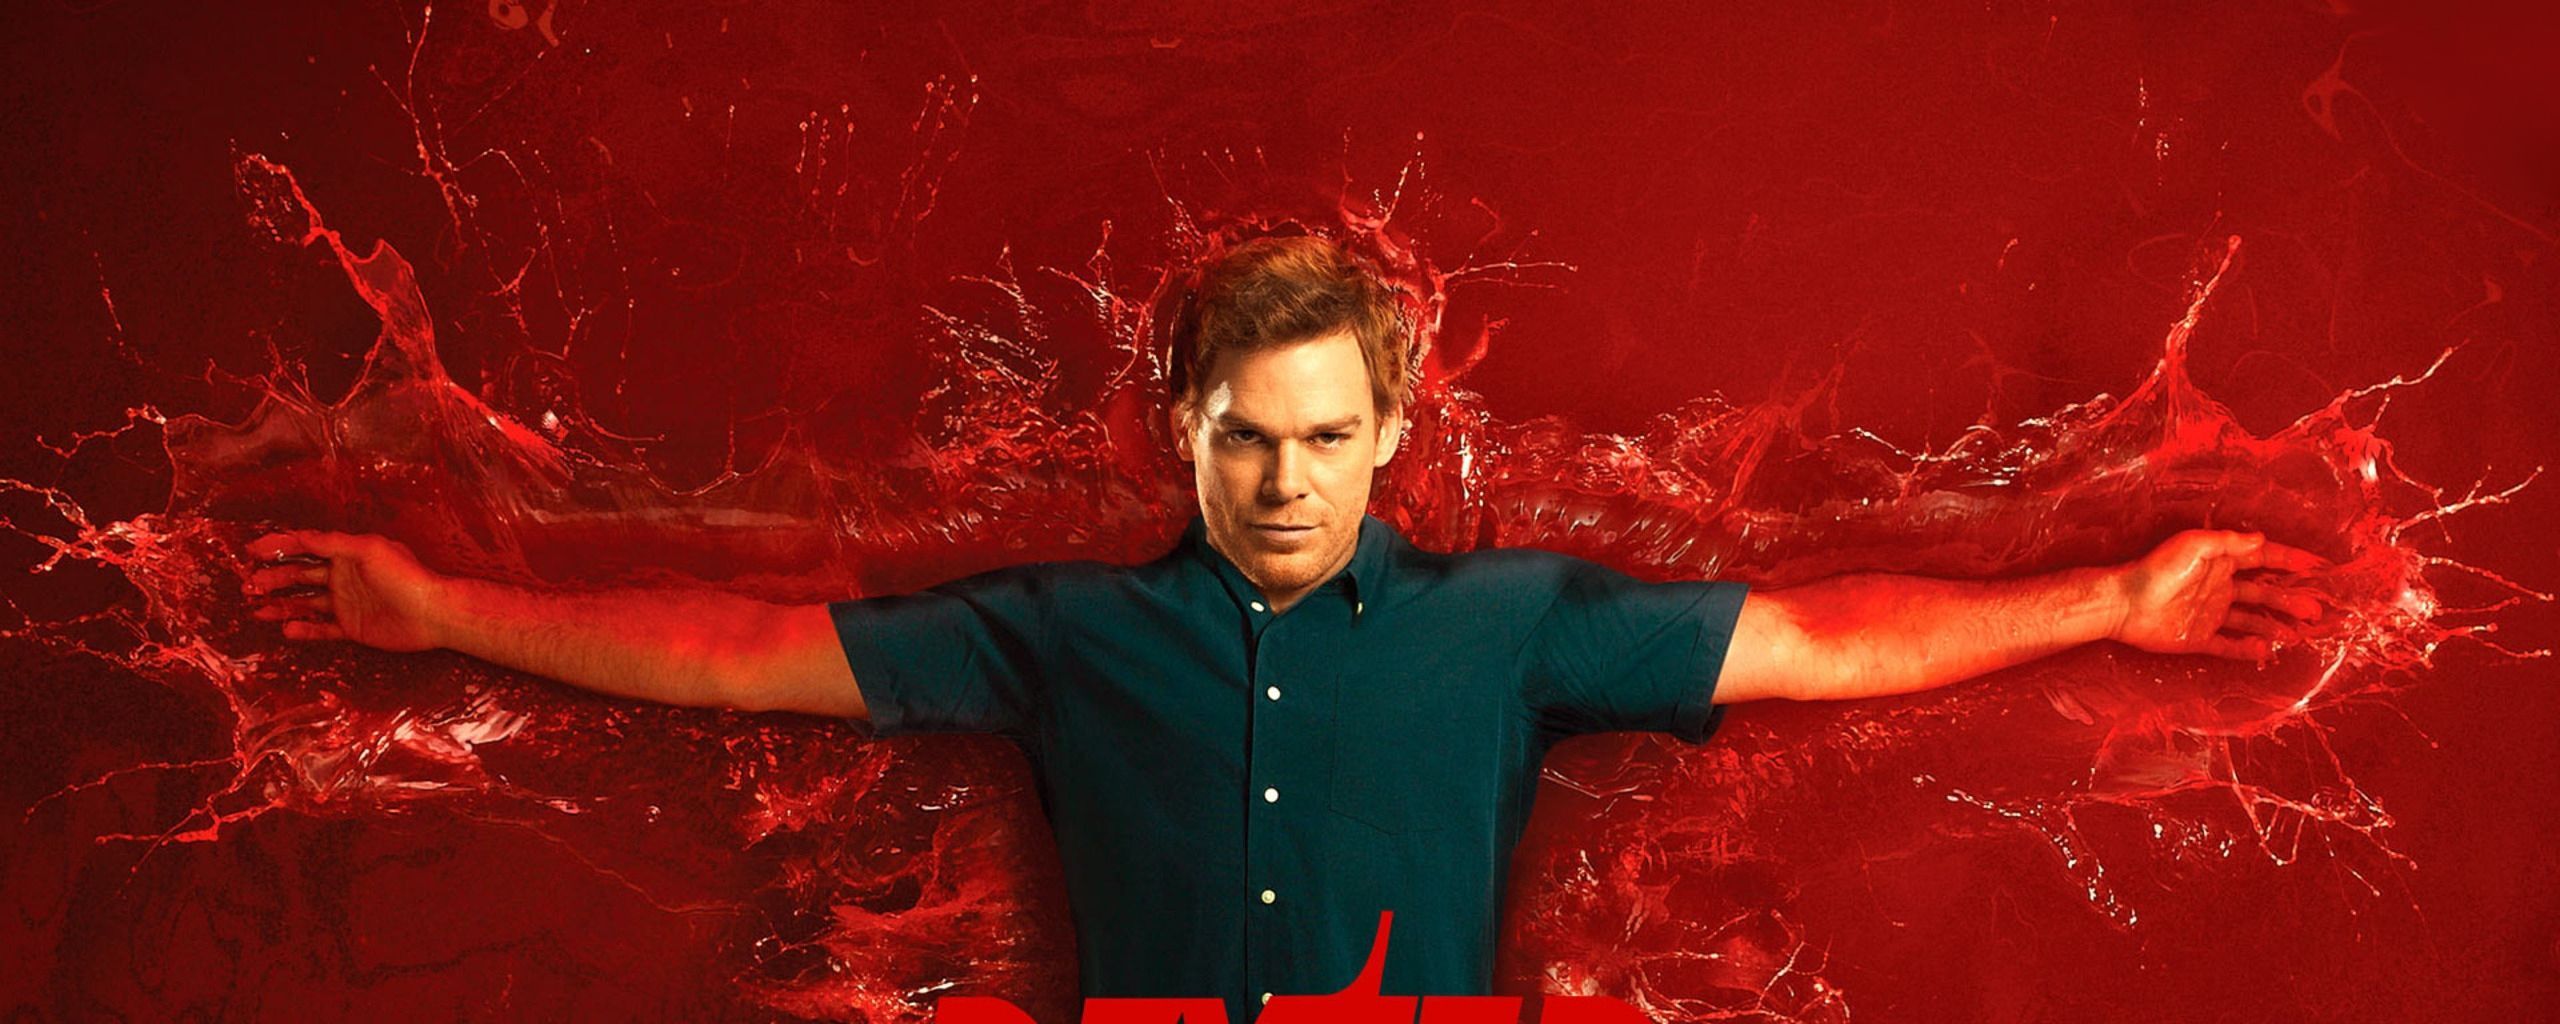 Dexter Blood-Angel HD Wallpaper - Cool Wallpapers